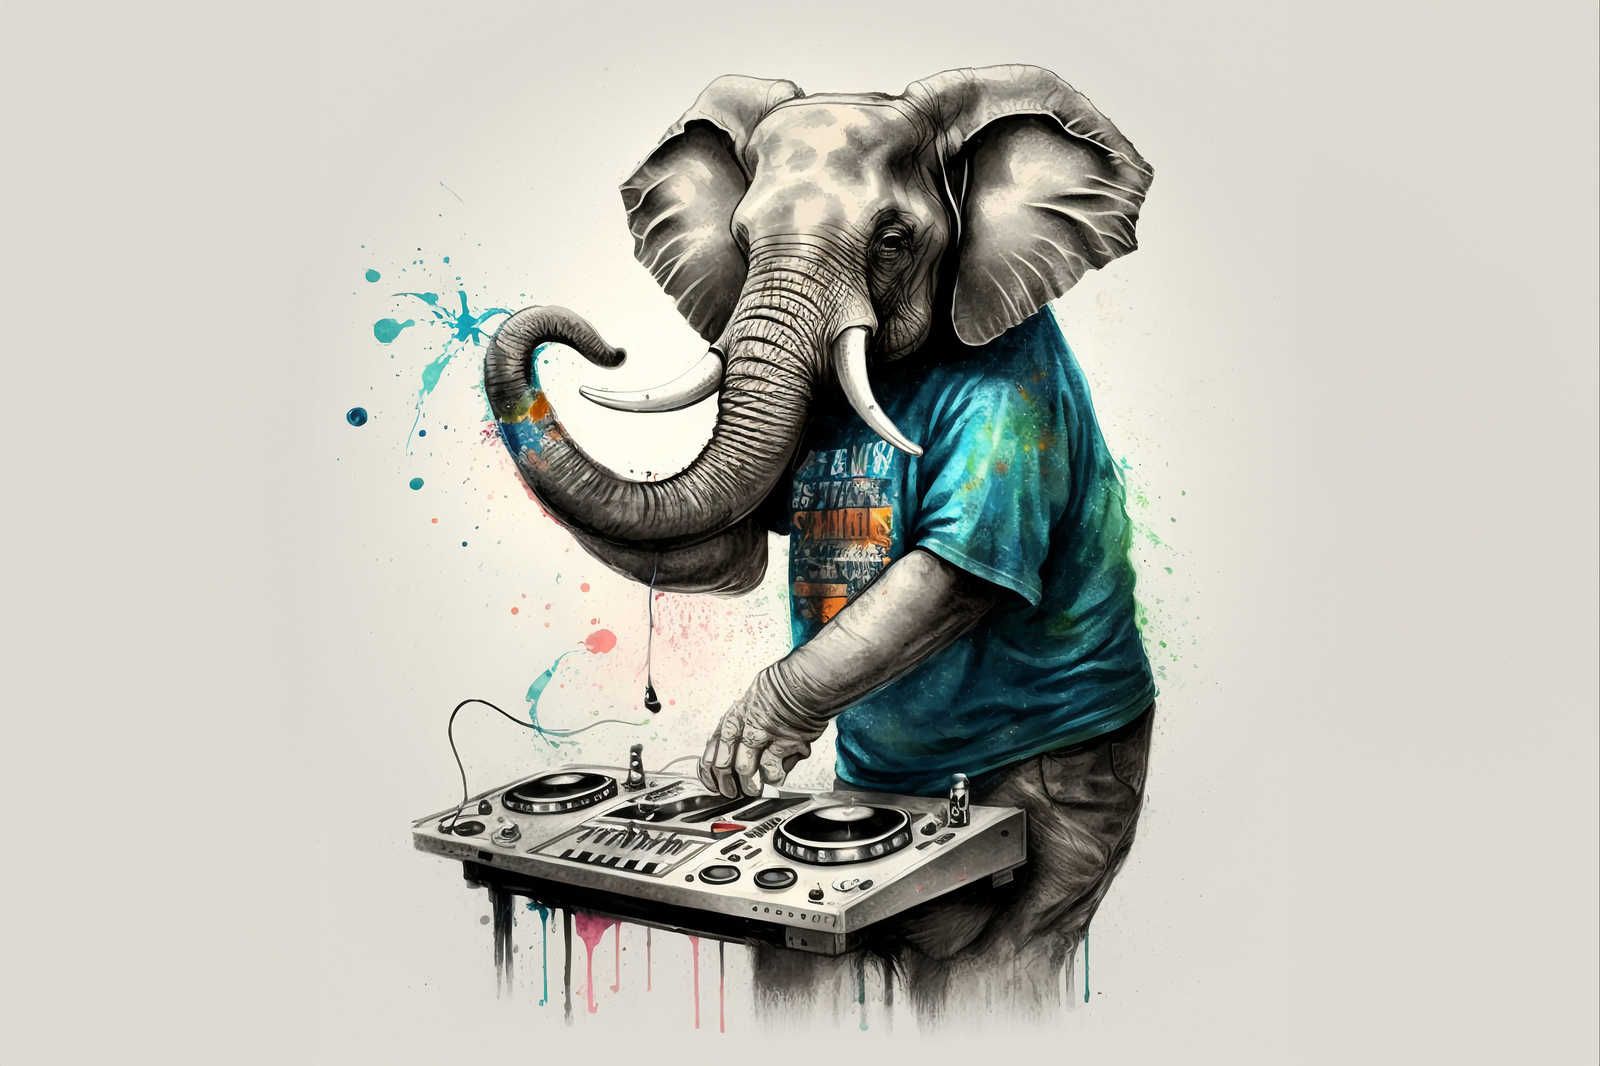             KI Canvas painting »elephant dj« - 90 cm x 60 cm
        